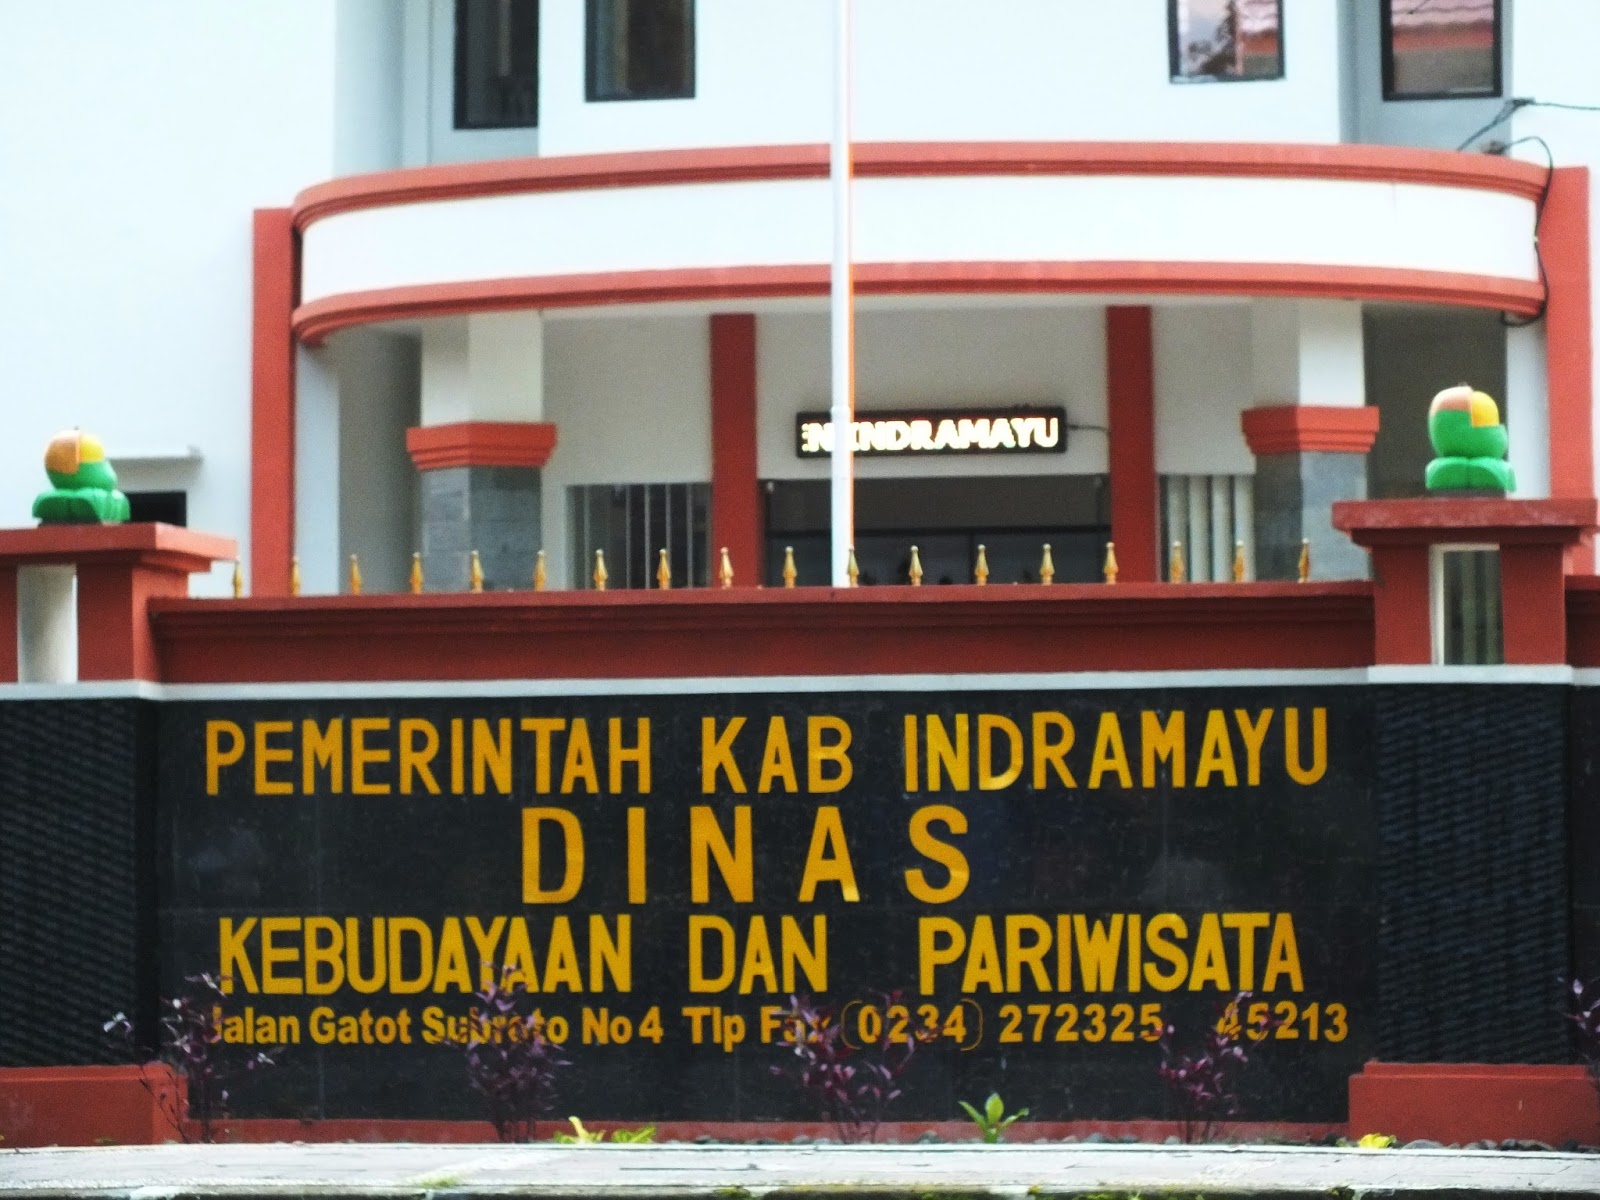 Baebudindanajengku: Dinas Kebudayaan Dan Pariwisata Kabupaten